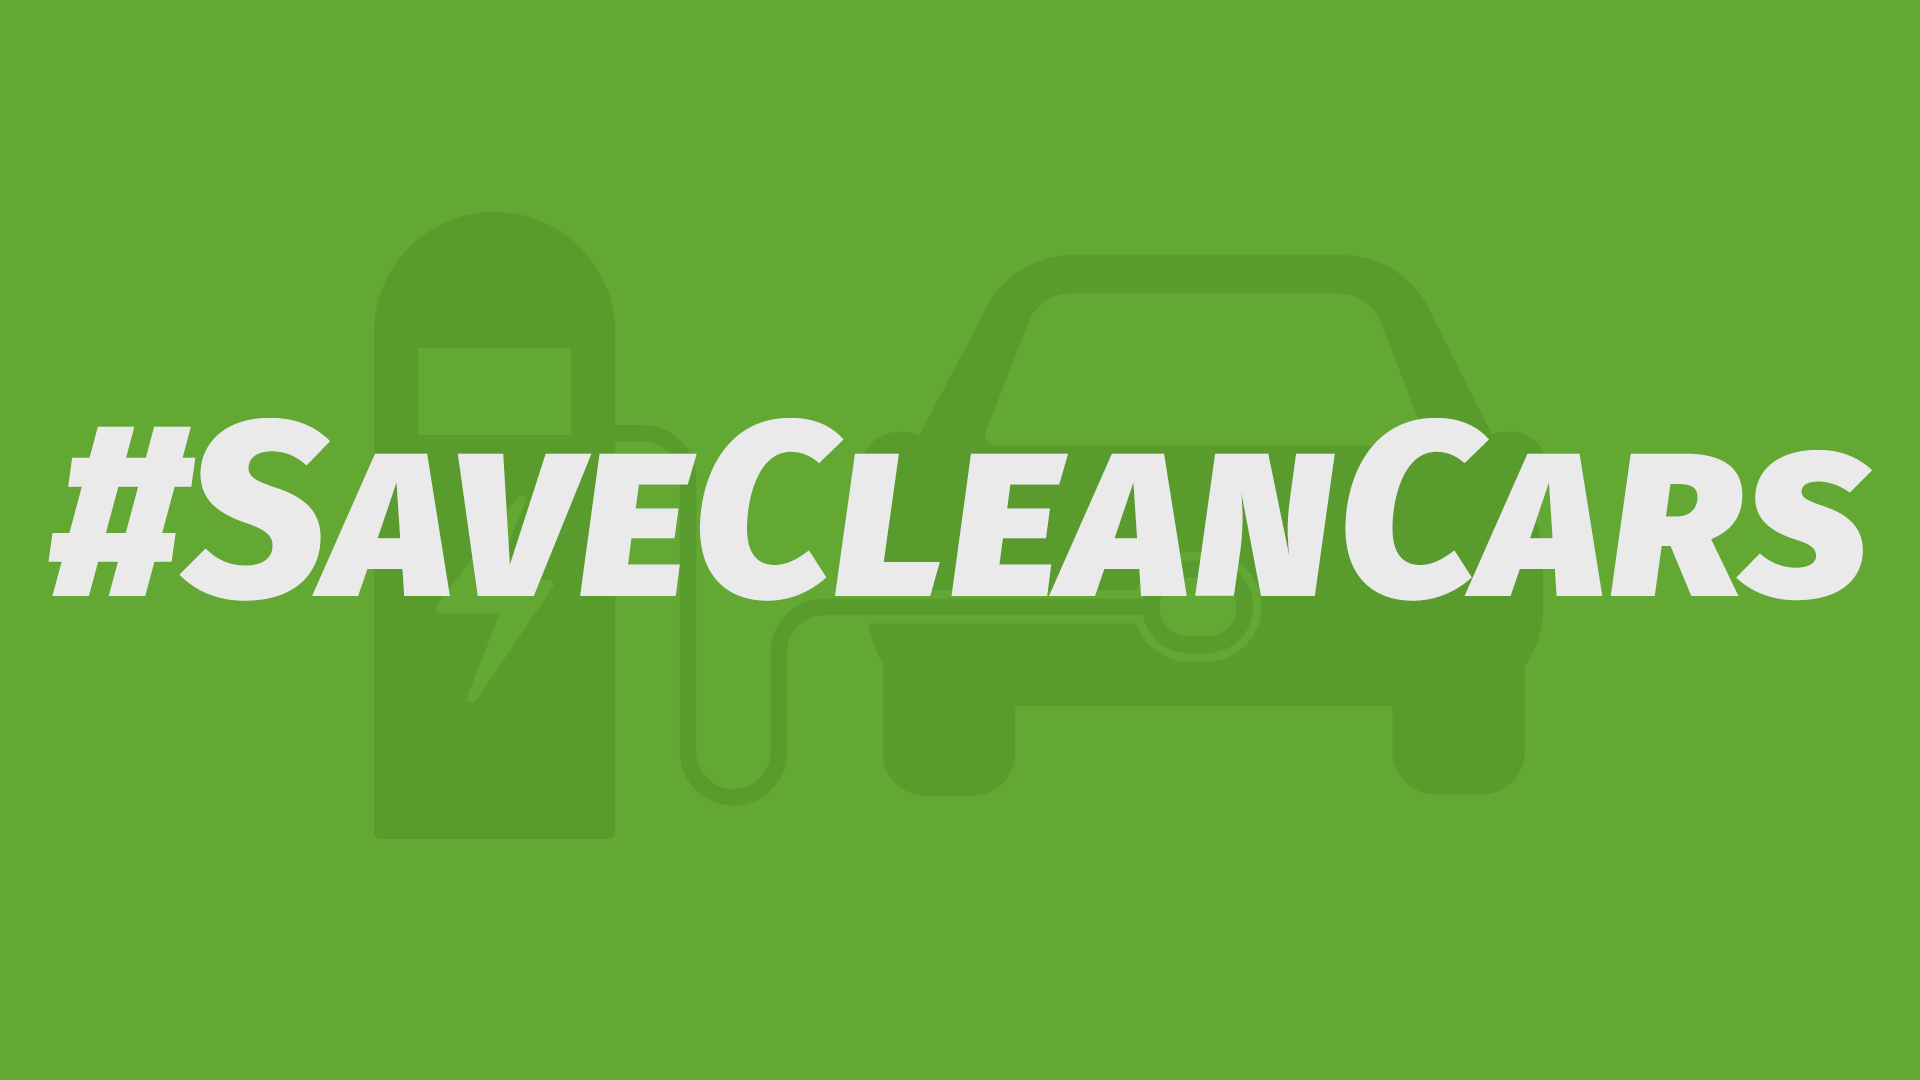 #SaveCleanCars